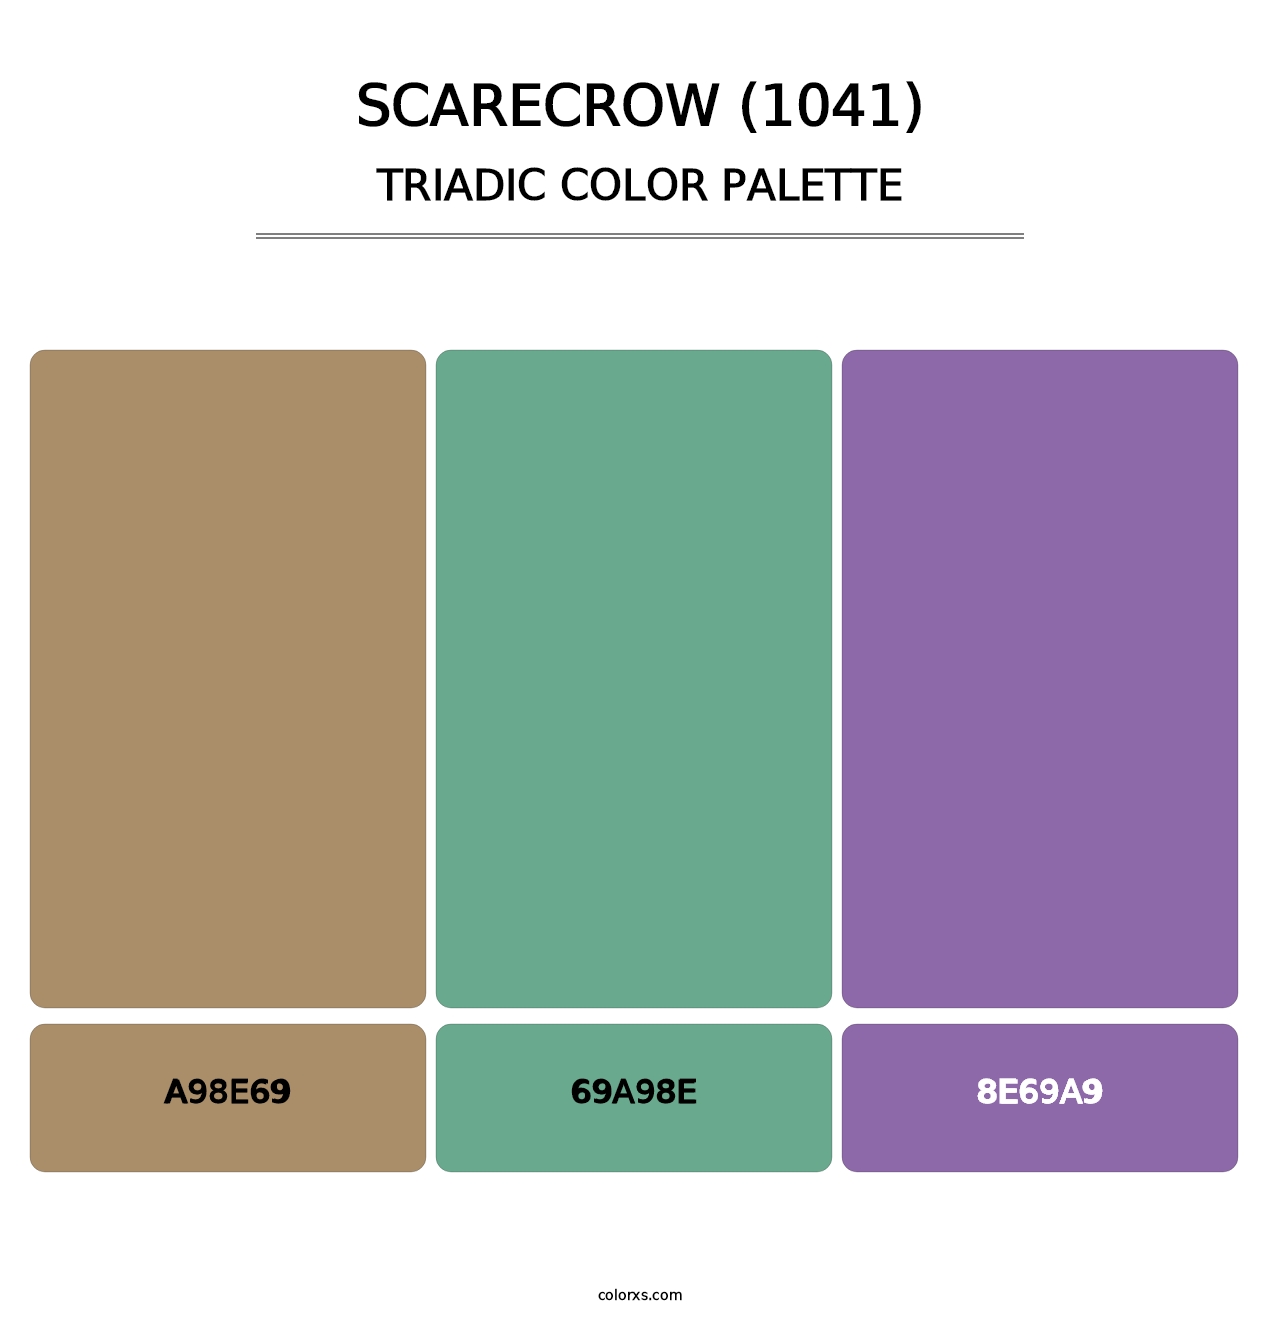 Scarecrow (1041) - Triadic Color Palette